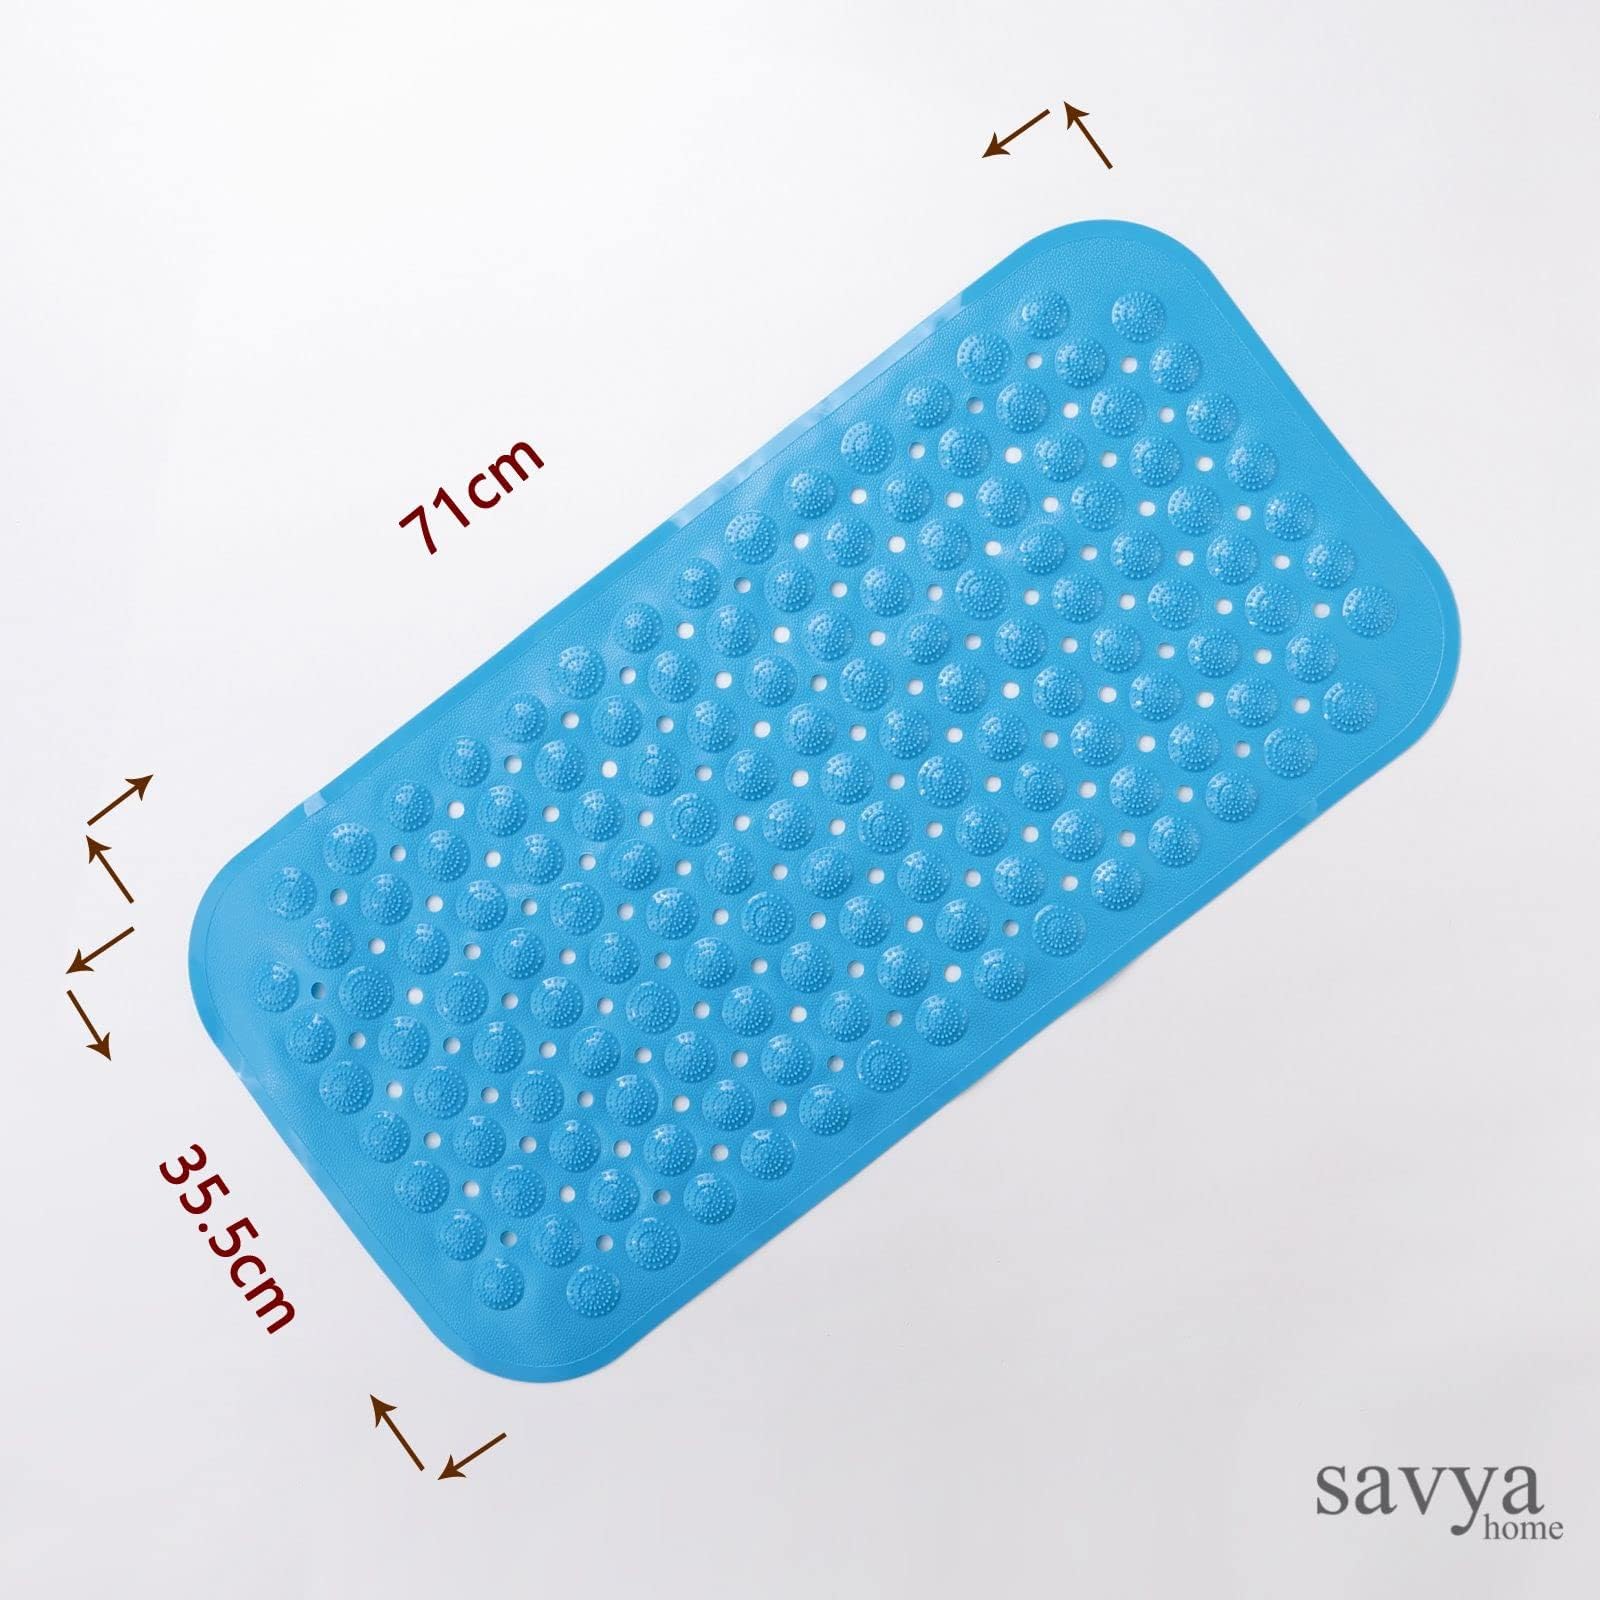 Savya Home Pack of 2 Diatom Mud Bathroom Floor Mat |71 x 35.5 cm|PVC Accu-Pebble Soft & Light Weight Anti-Skid Mat for Living Room,Bathroom/Shower Mat/Multipurpose (Blue)